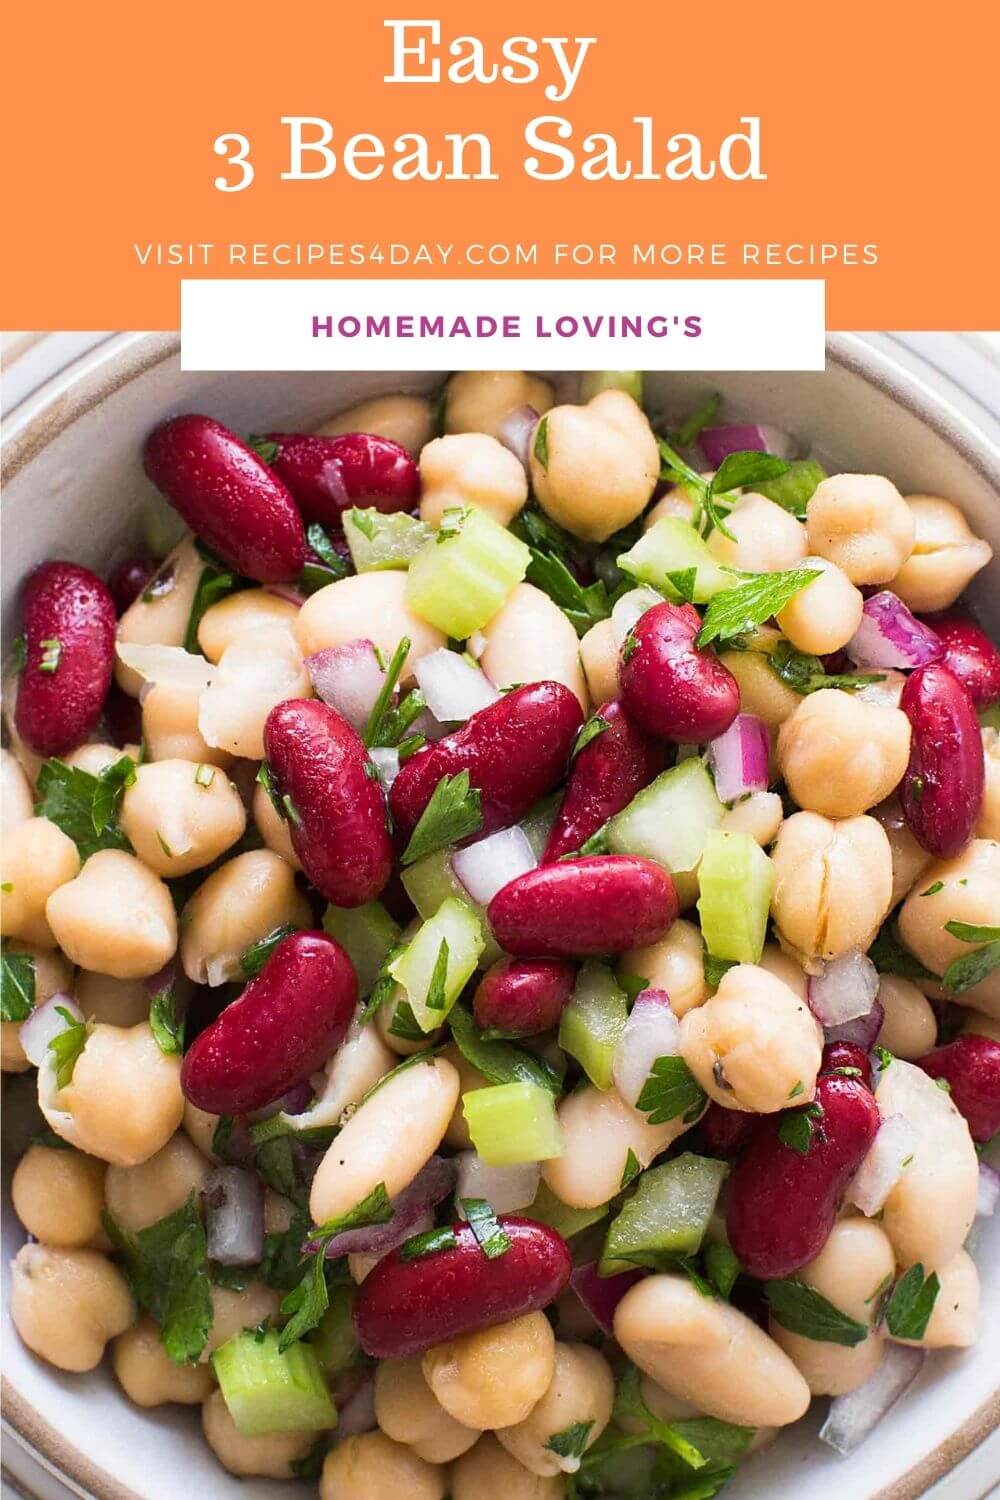 recipe for 3 bean salad